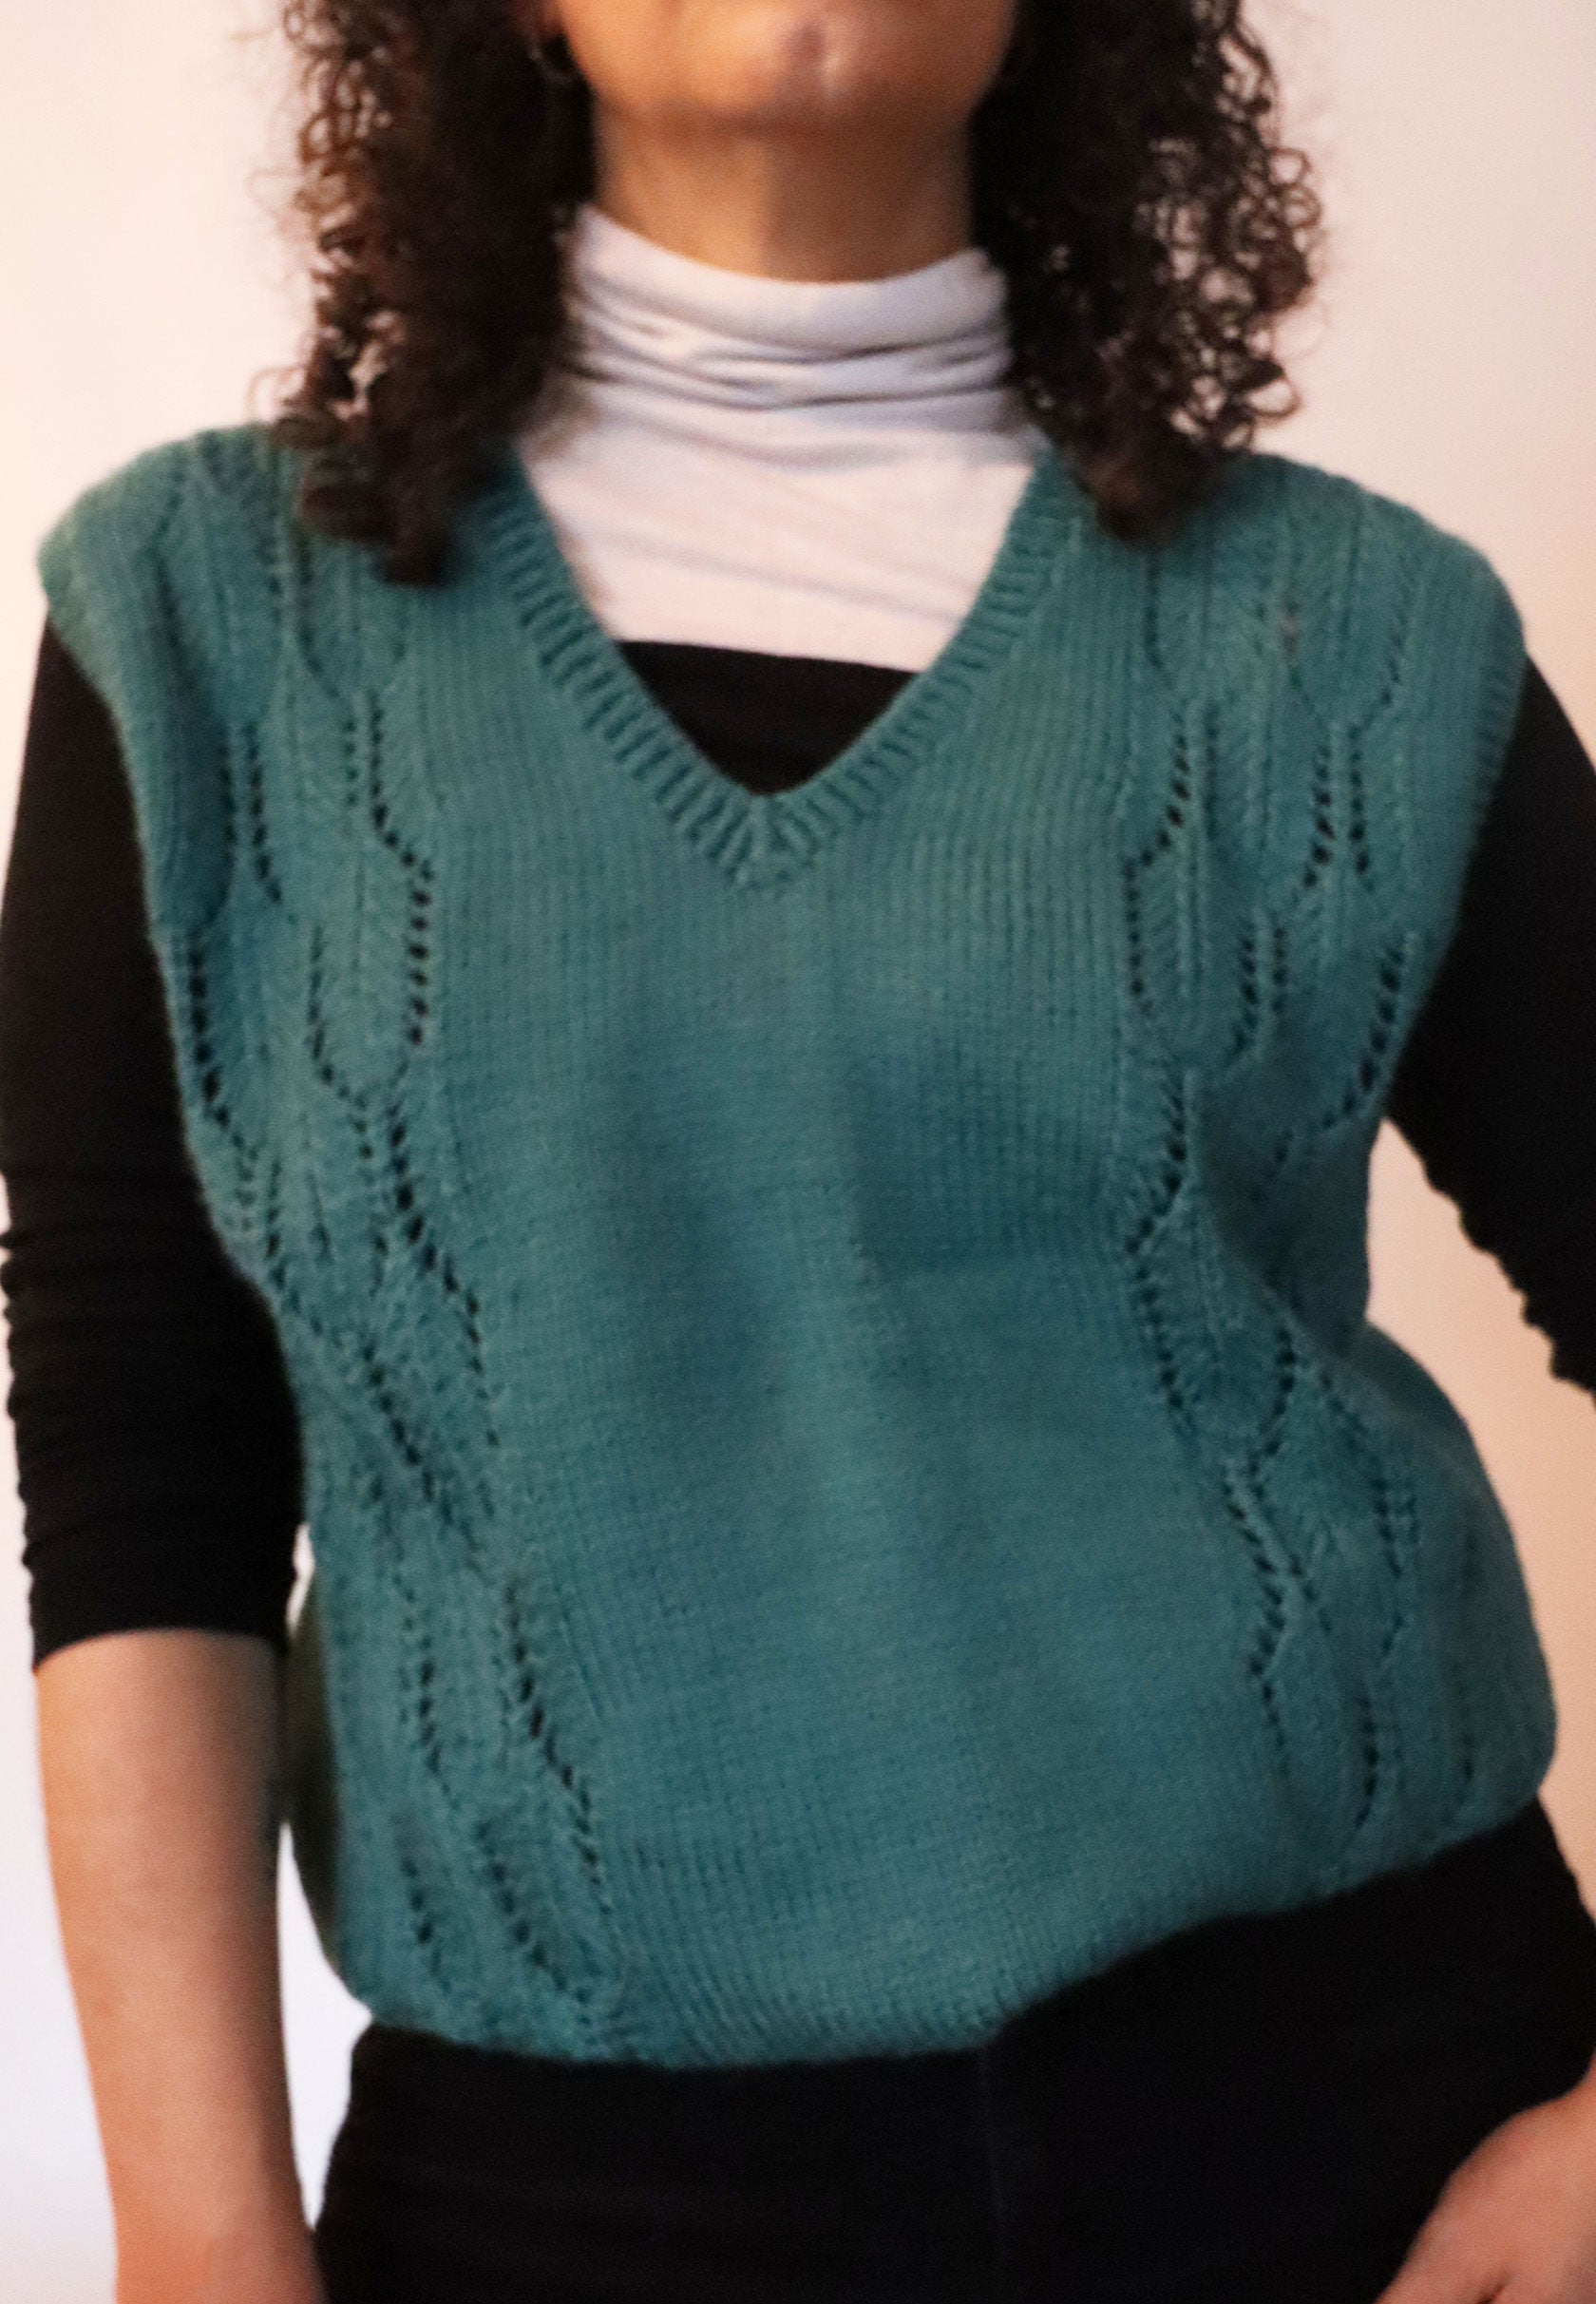 Handmade Knitted Sweater Vest - Green